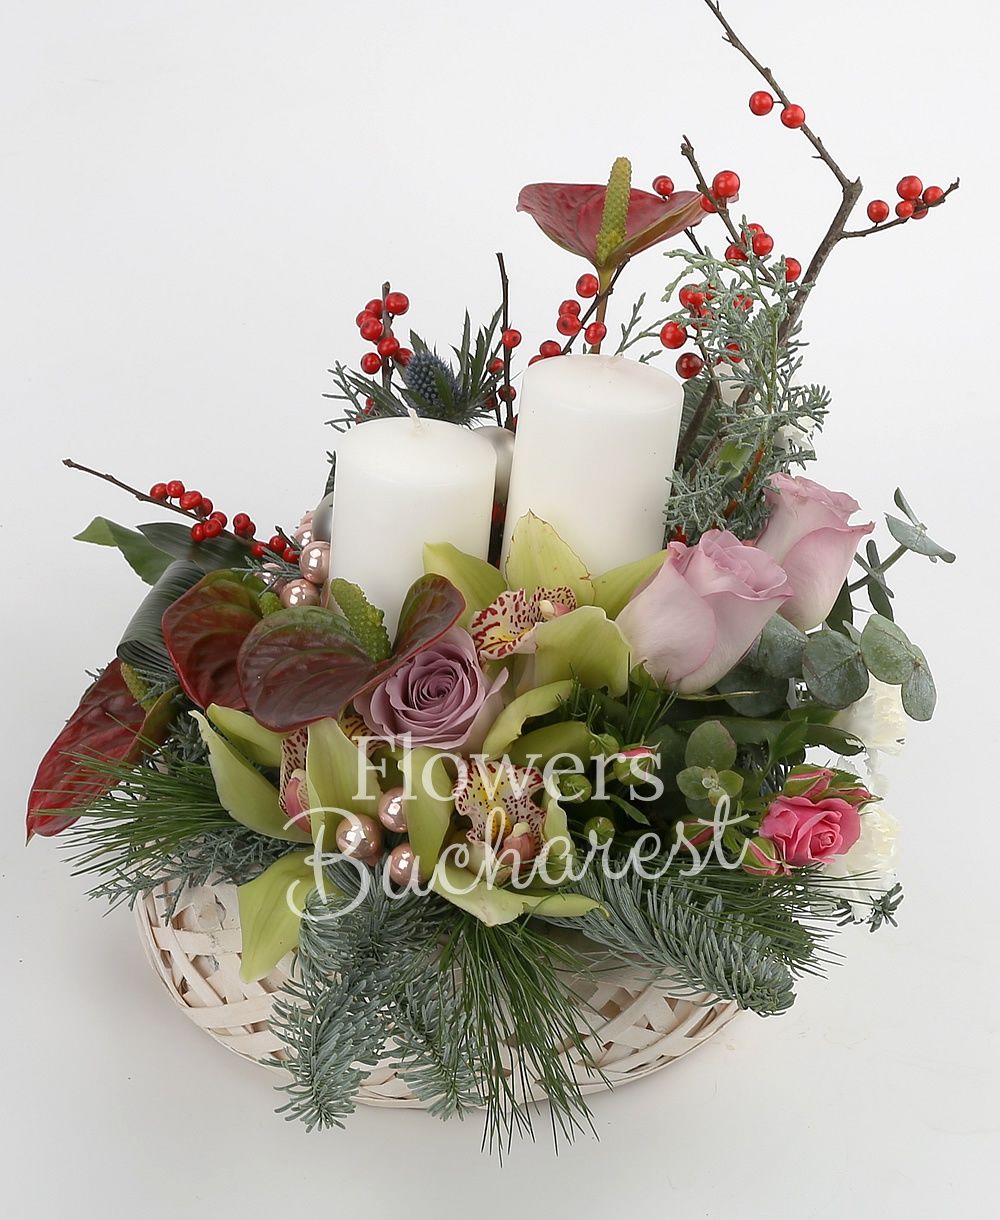 4 anthurium, 3 mauve roses, 1 pink minirose, green cymbidium, eryngium, white lisianthus, ilex, candles, globes, greenery